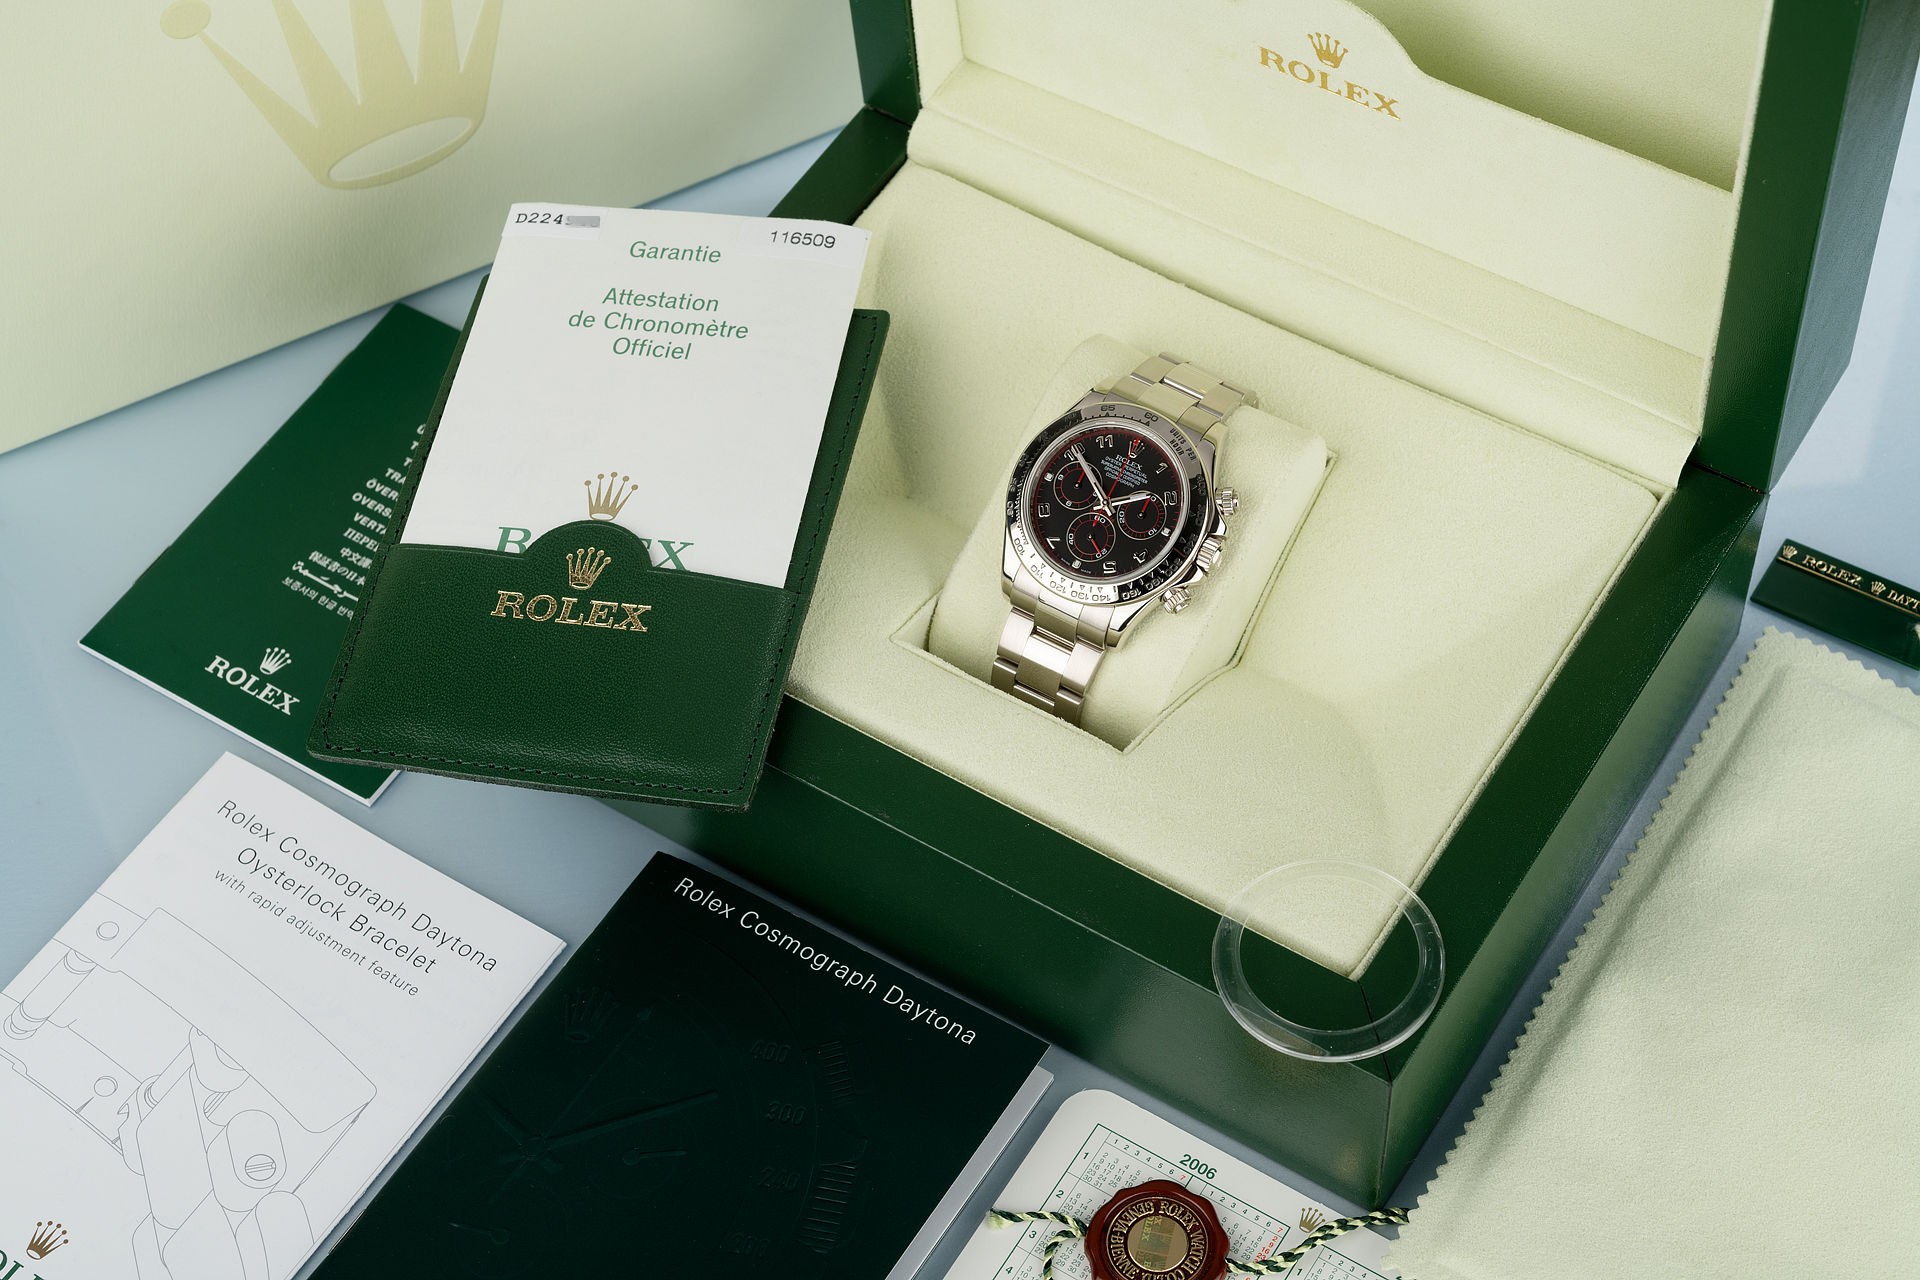 18ct White Gold Box & Certificate | ref 116509 | Rolex Cosmograph Daytona